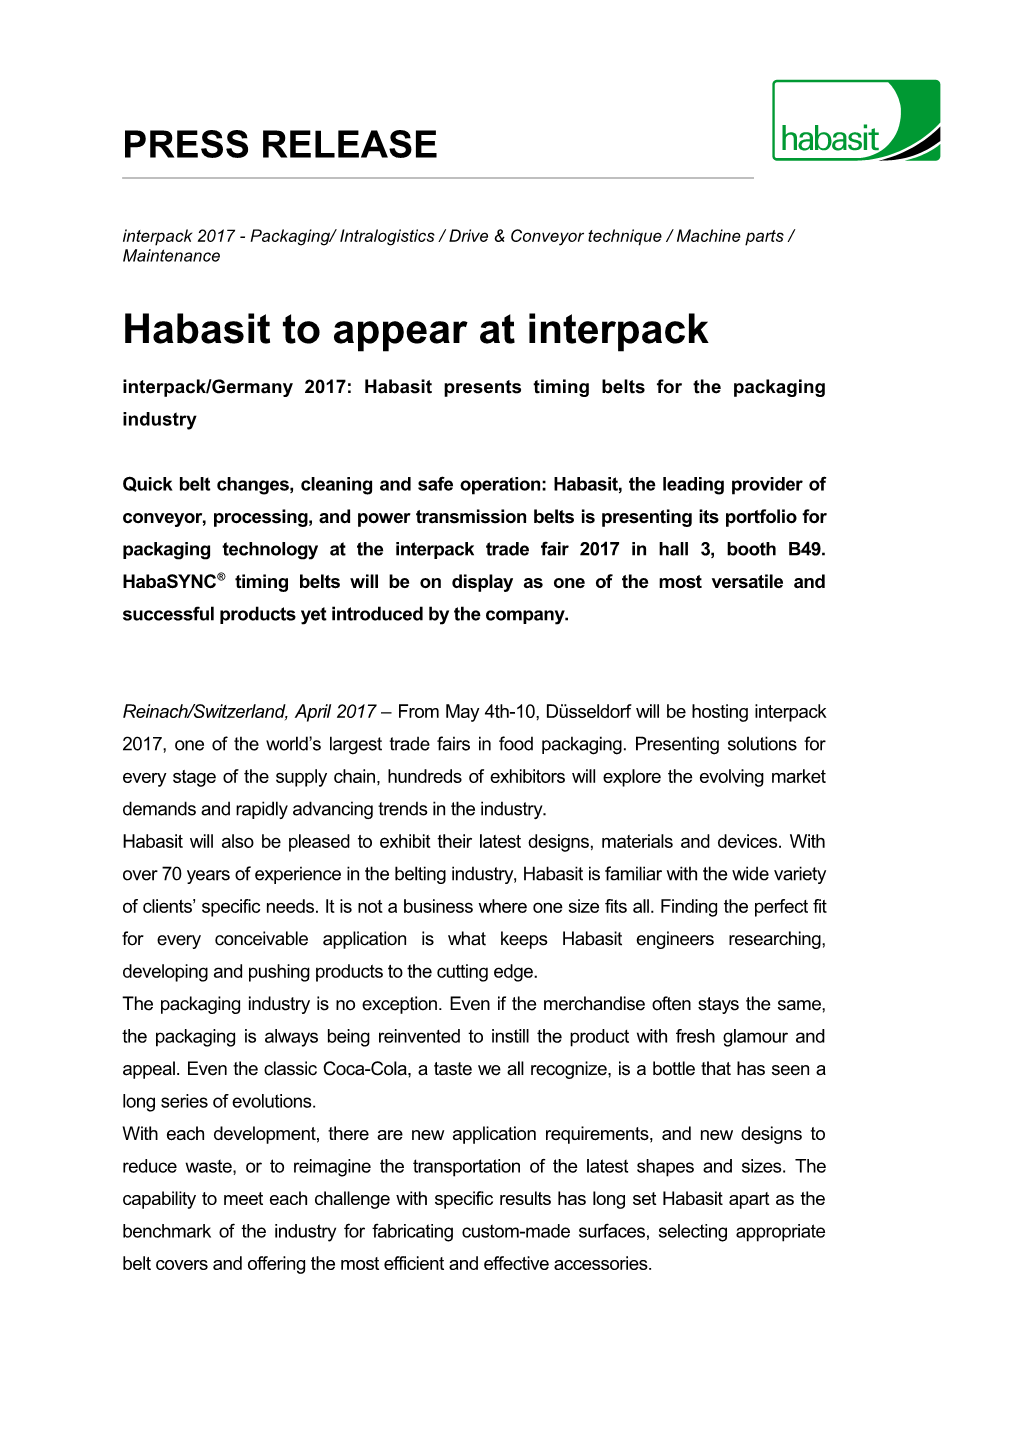 PRESSE-INFORMATION Habasit s2